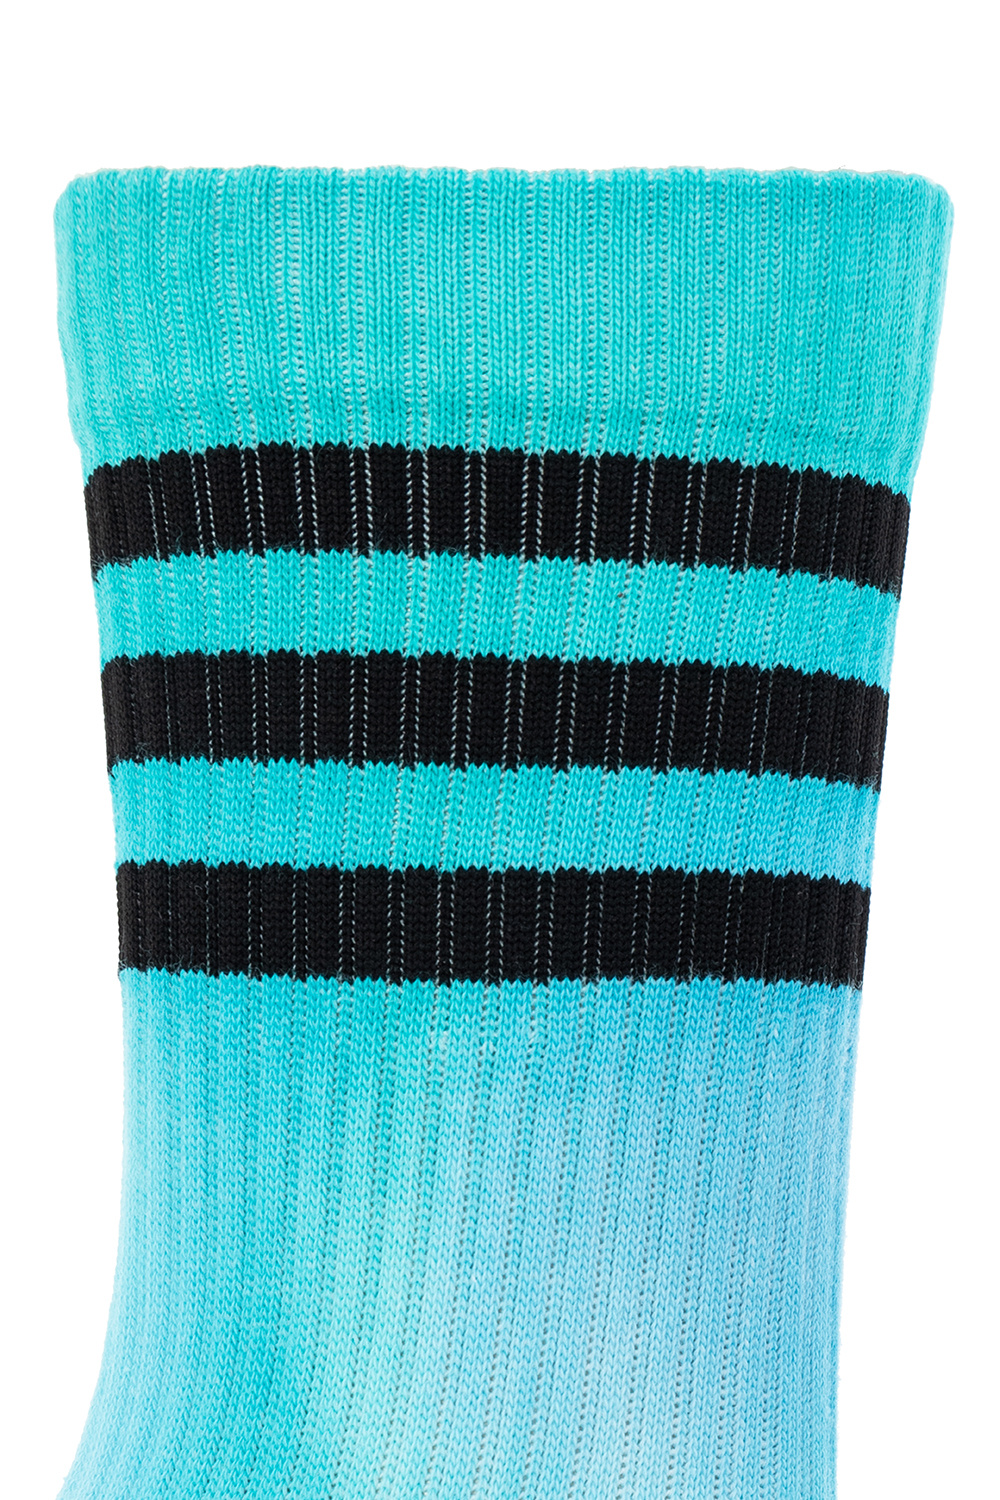 ADIDAS Performance Branded socks with logo